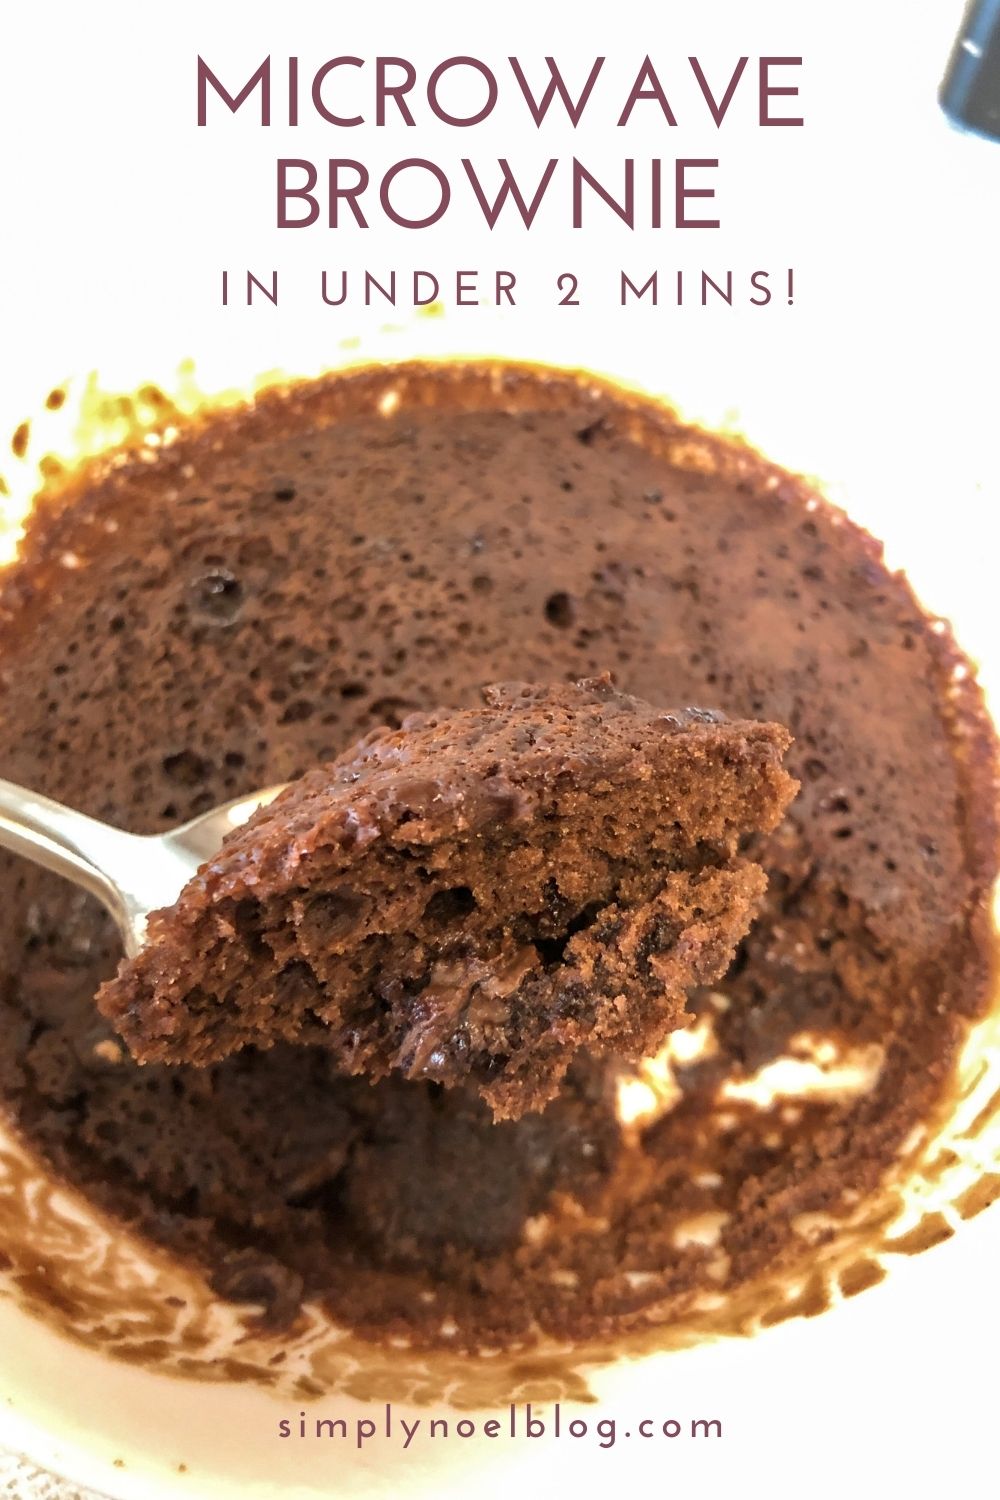 Microwave brownie with brownie mix